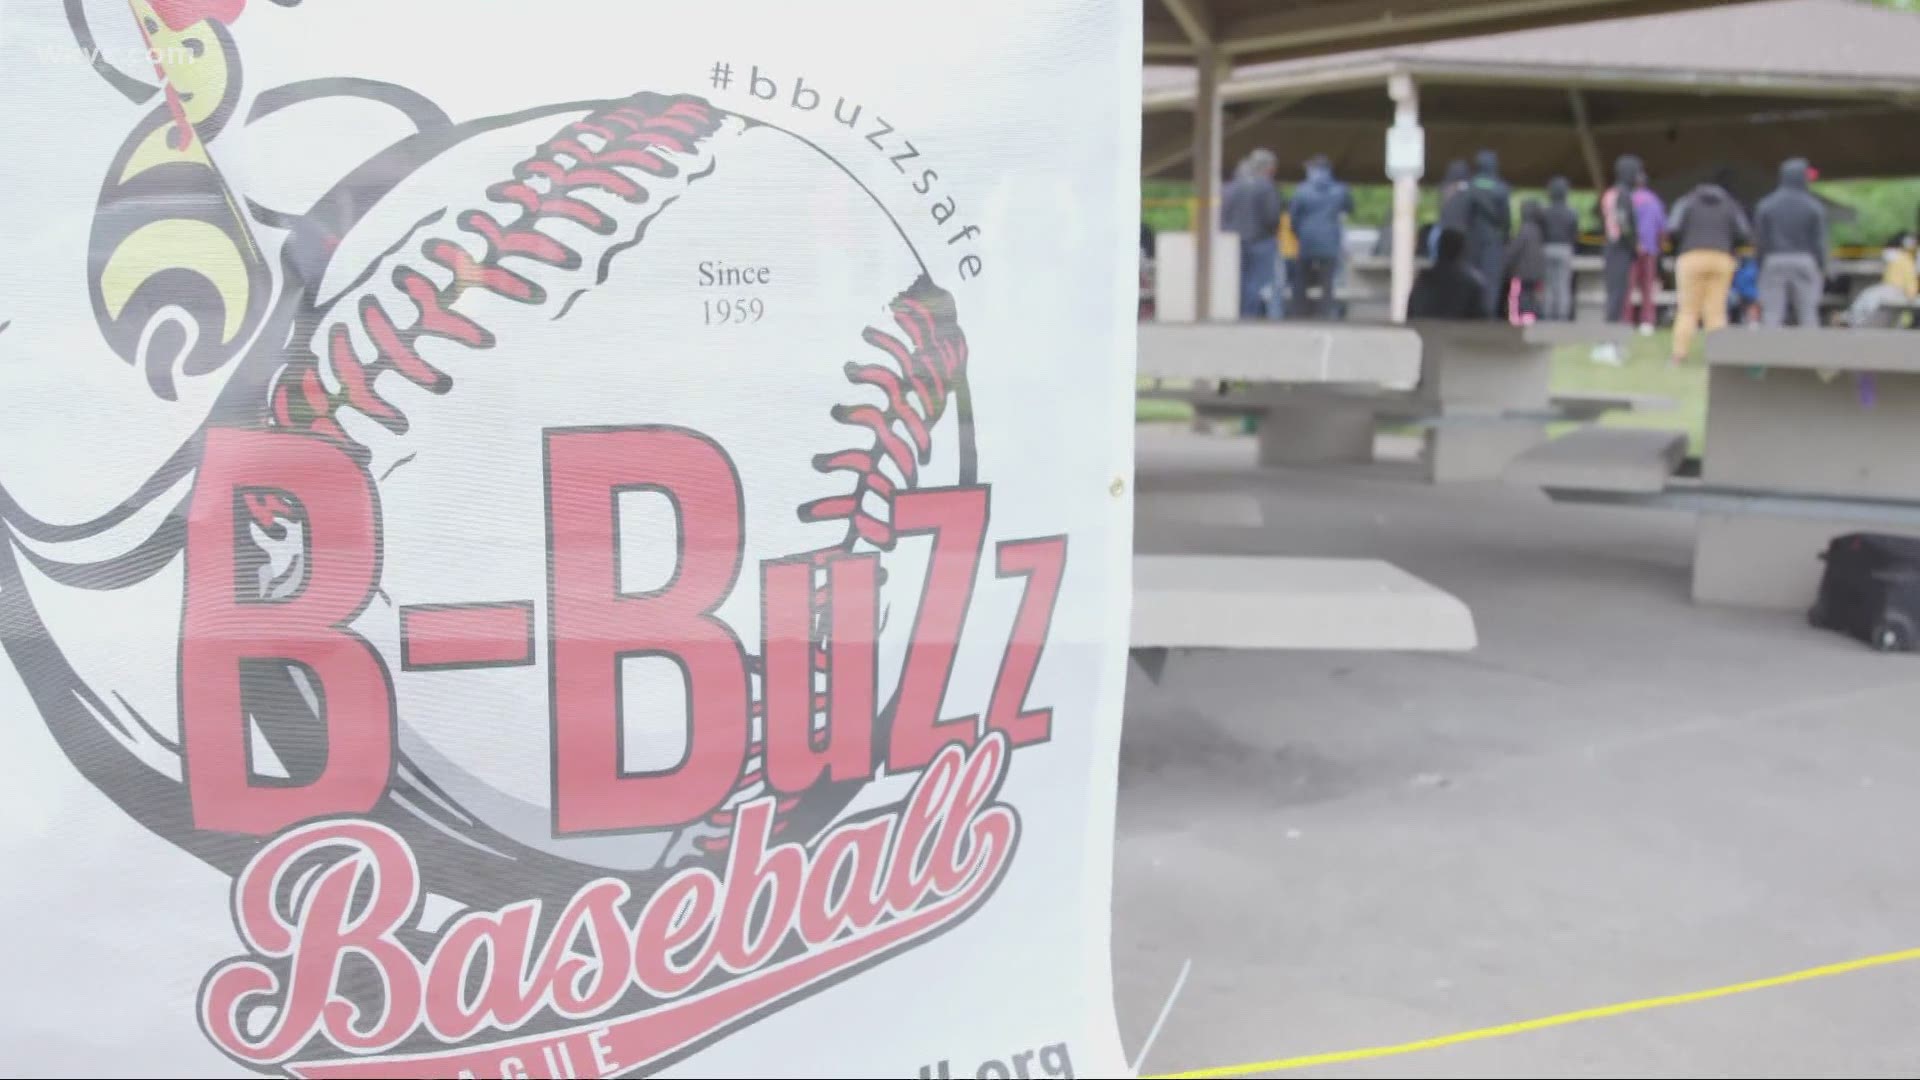 B-Buzz is an almost 70-year-old neighborhood baseball league for kids in Cleveland's Lee-Harvard neighborhood. Chris Webb reports.